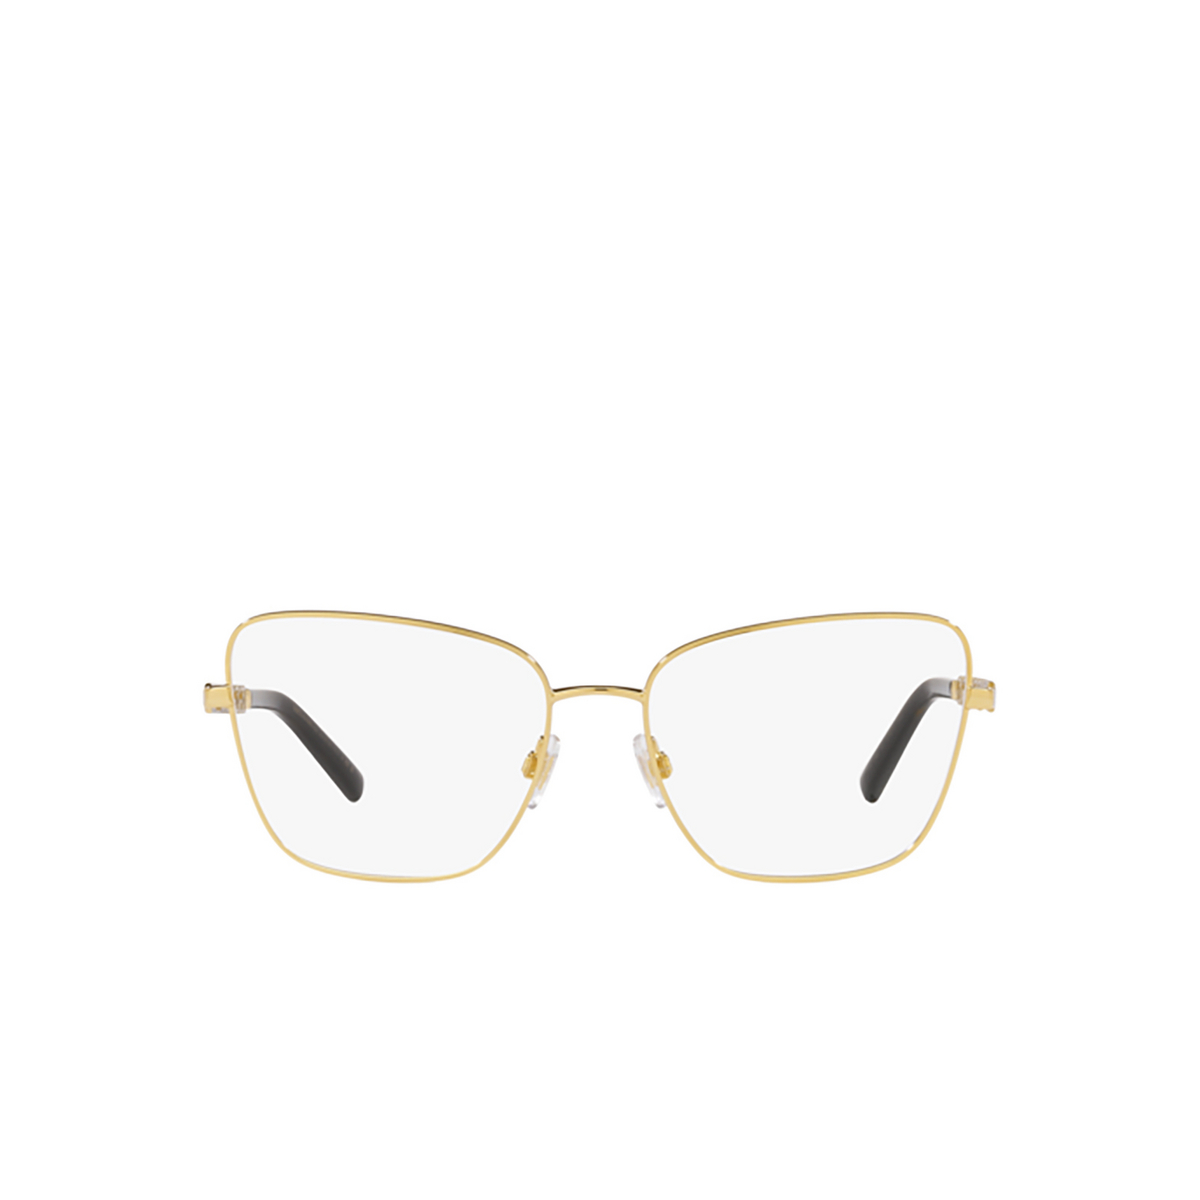 Dolce & Gabbana DG1346 Eyeglasses 02 Gold - front view